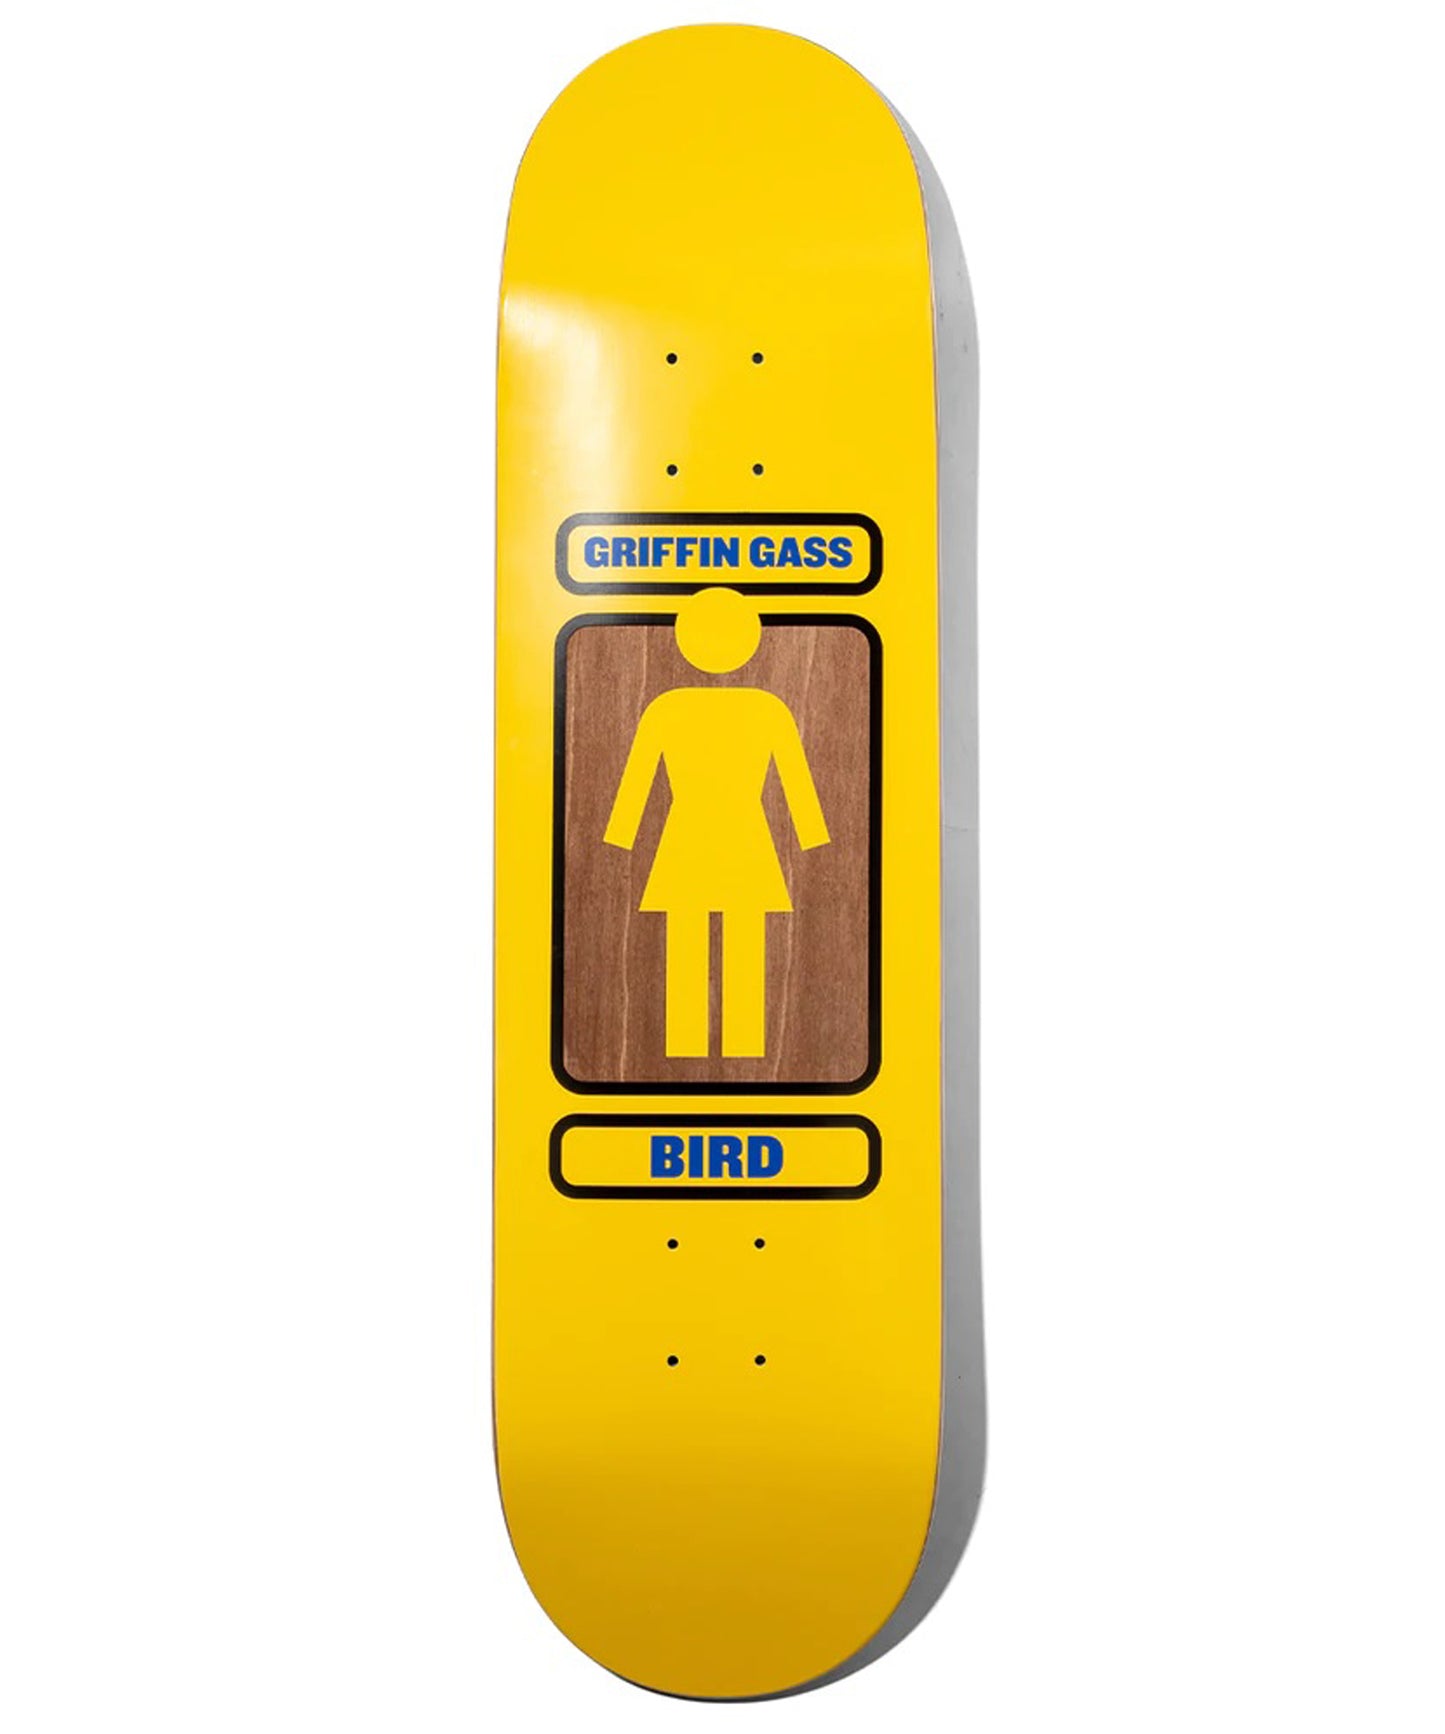 girl-skateboards-tabla-griffin-gas-bird-tabla de arce americano-7 laminas-epoxi-8.5 pulgadas-modelo pro griffin gas